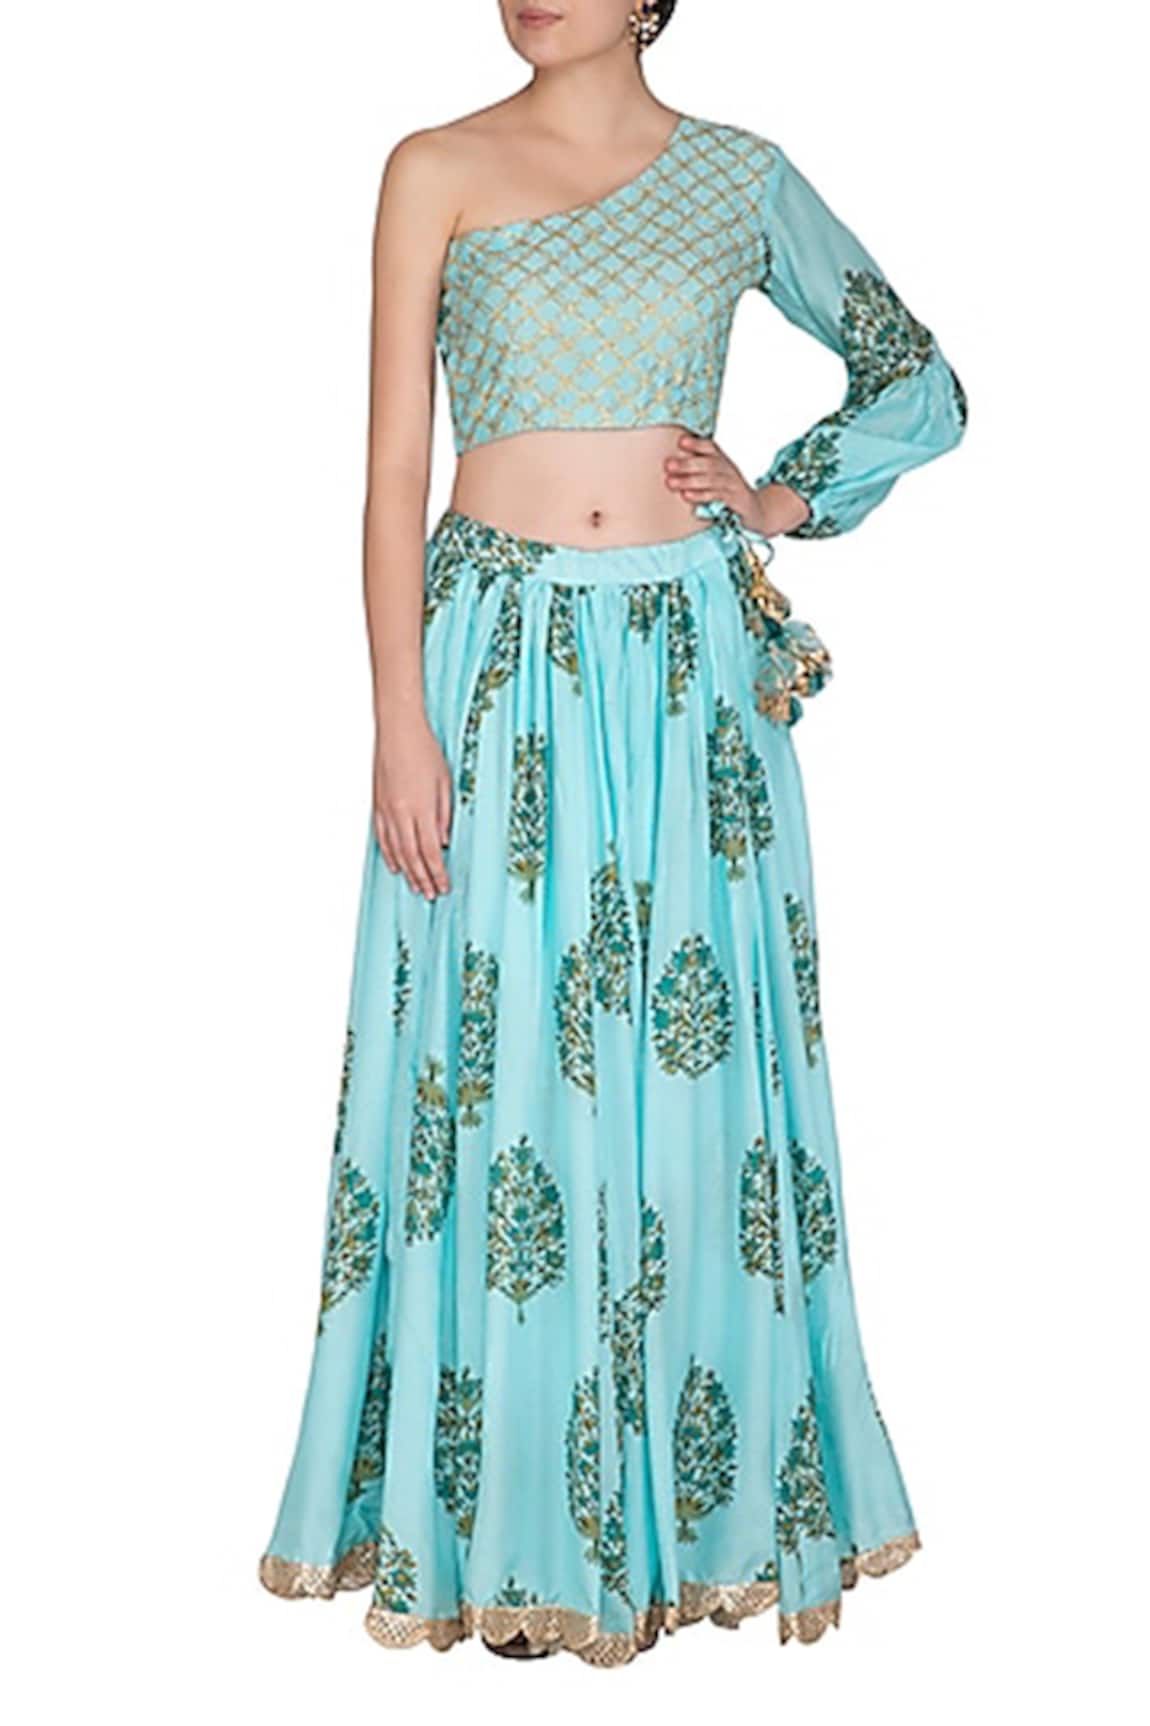 Yuvrani Jaipur One Shoulder Crop Top & Skirt Set